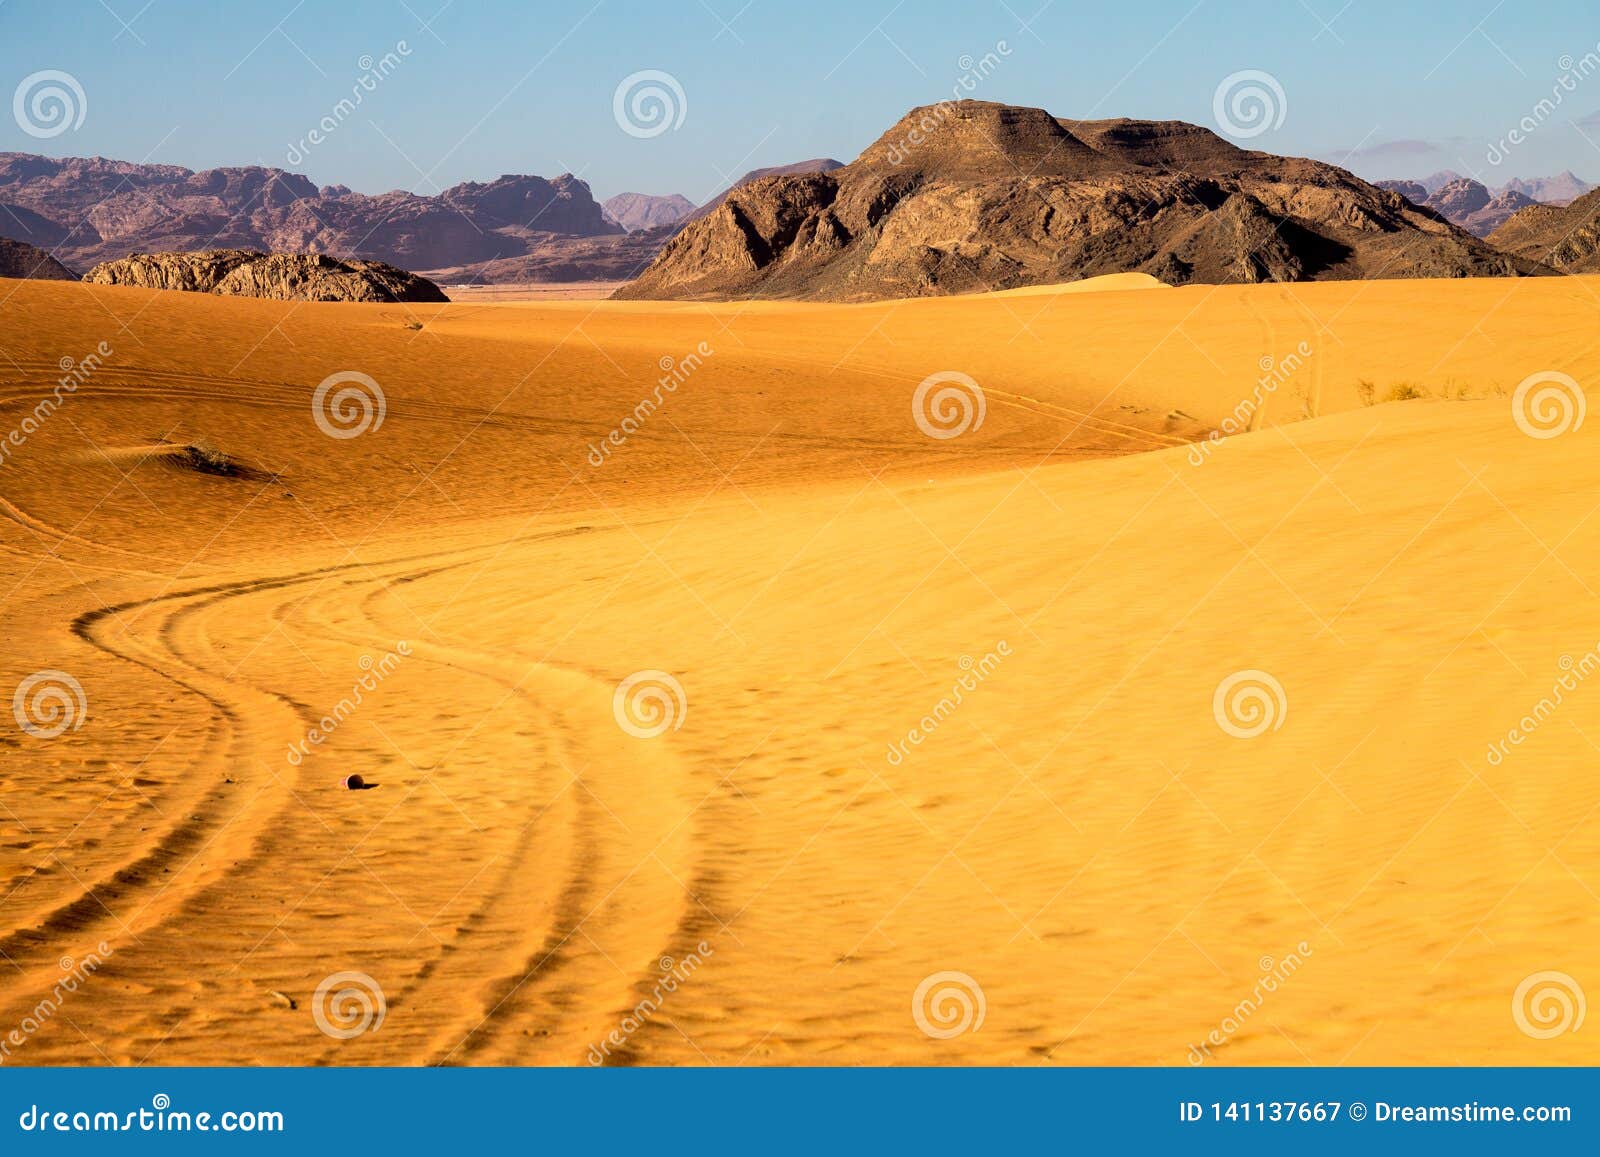 color tones in wadi rum desert